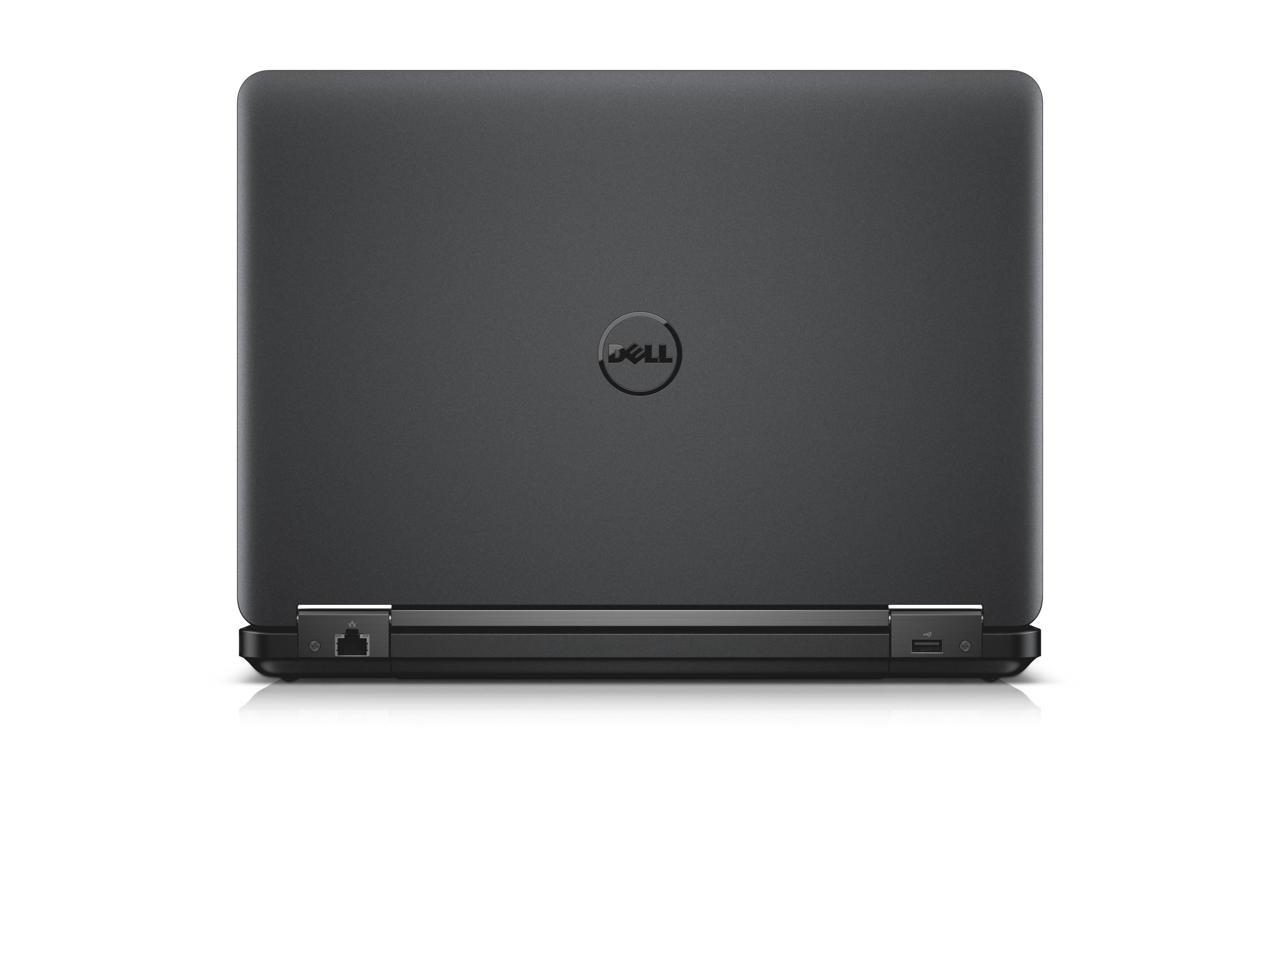 Refurbished Dell Latitude E5440 Laptop Computer Intel Core i5 Processor, 16GB Ram, 500GB Hard Drive, Windows 10 Operating System, 1 Year Warranty